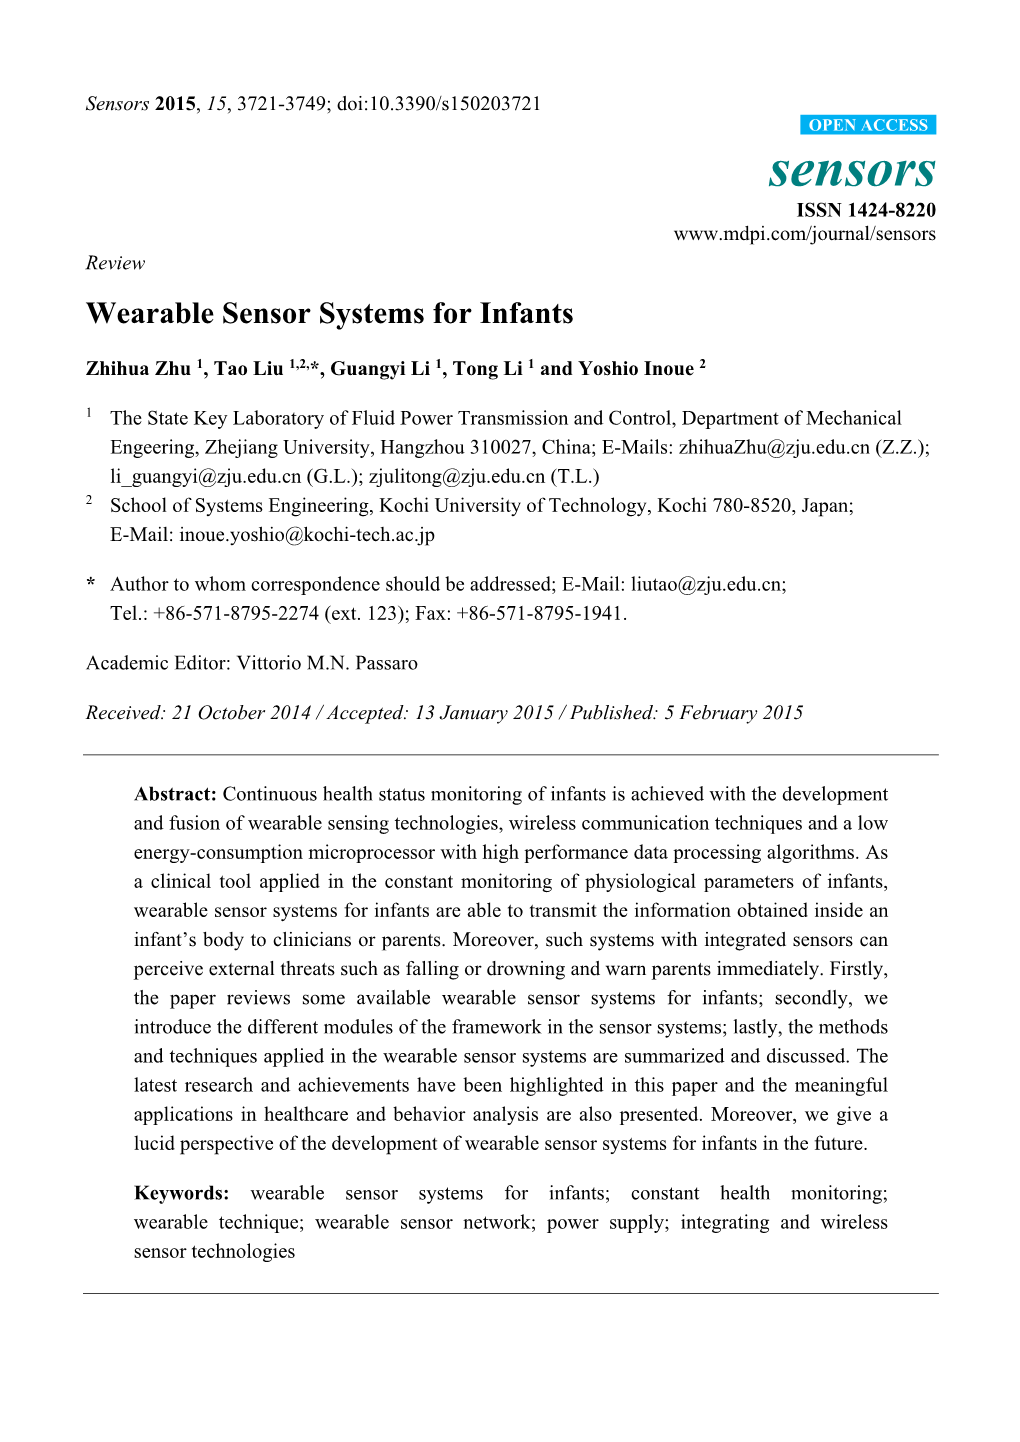 Wearable Sensor Systems for Infants